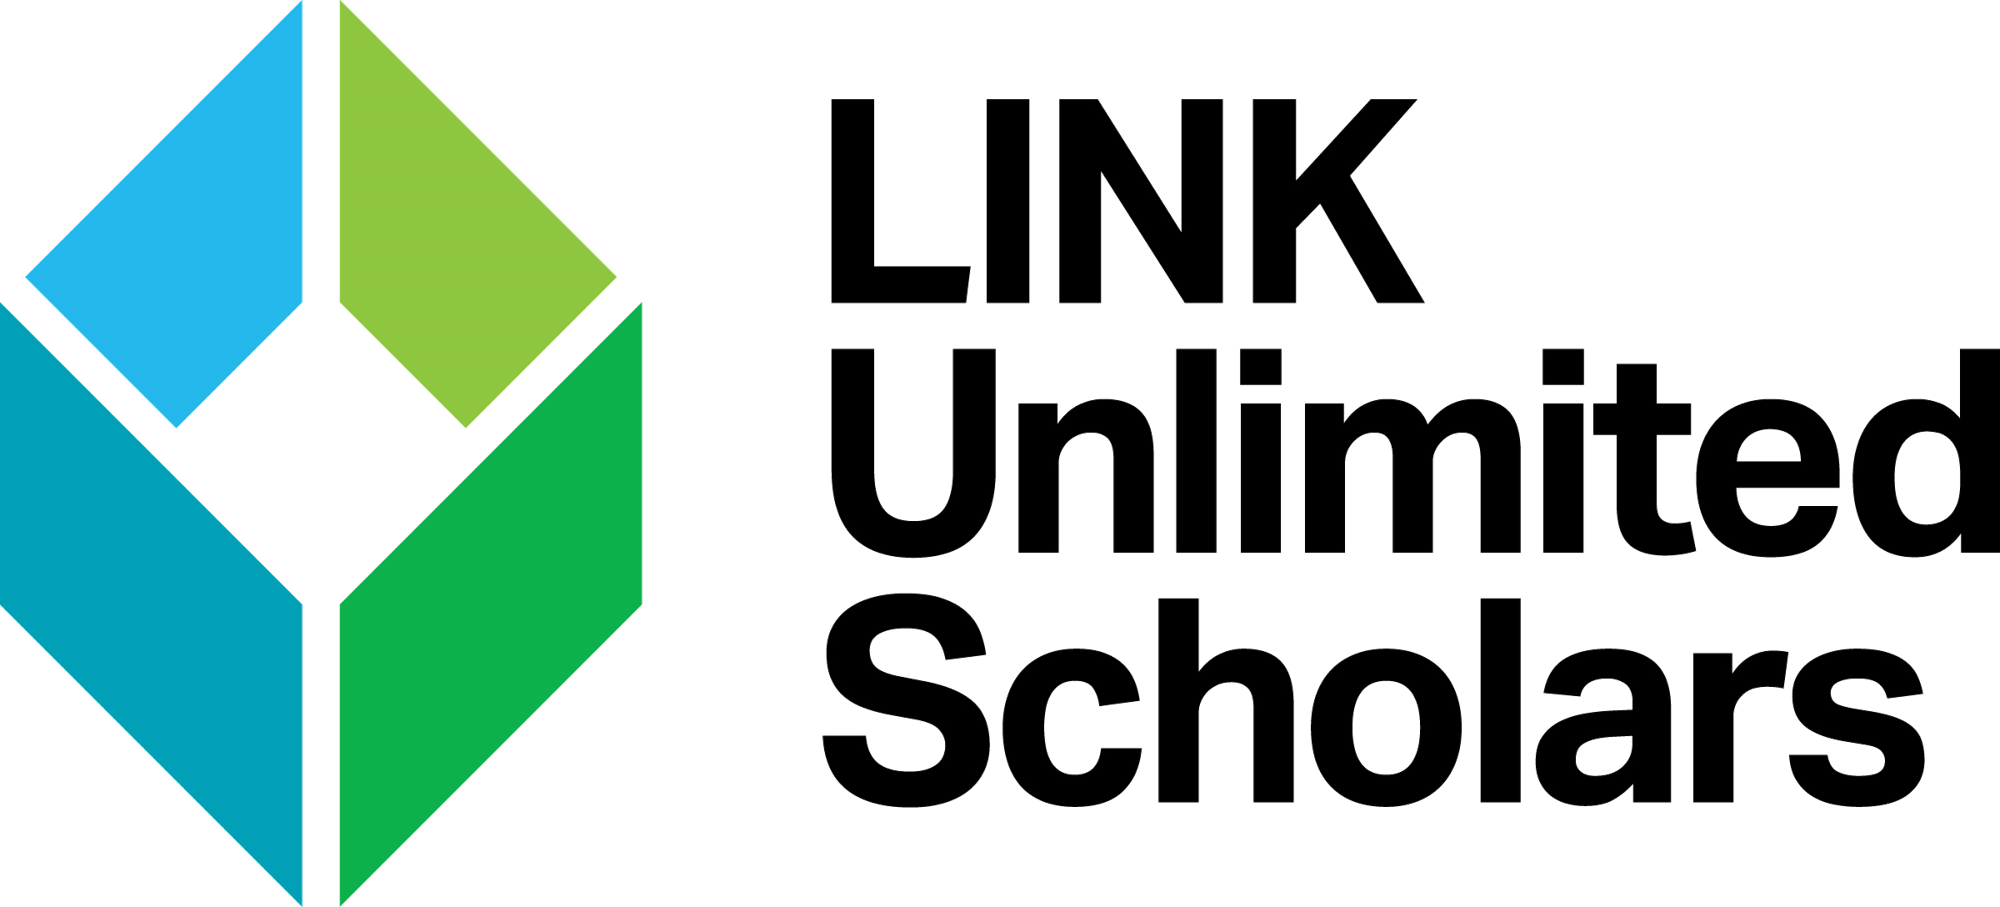 LINK Unlimited Scholars